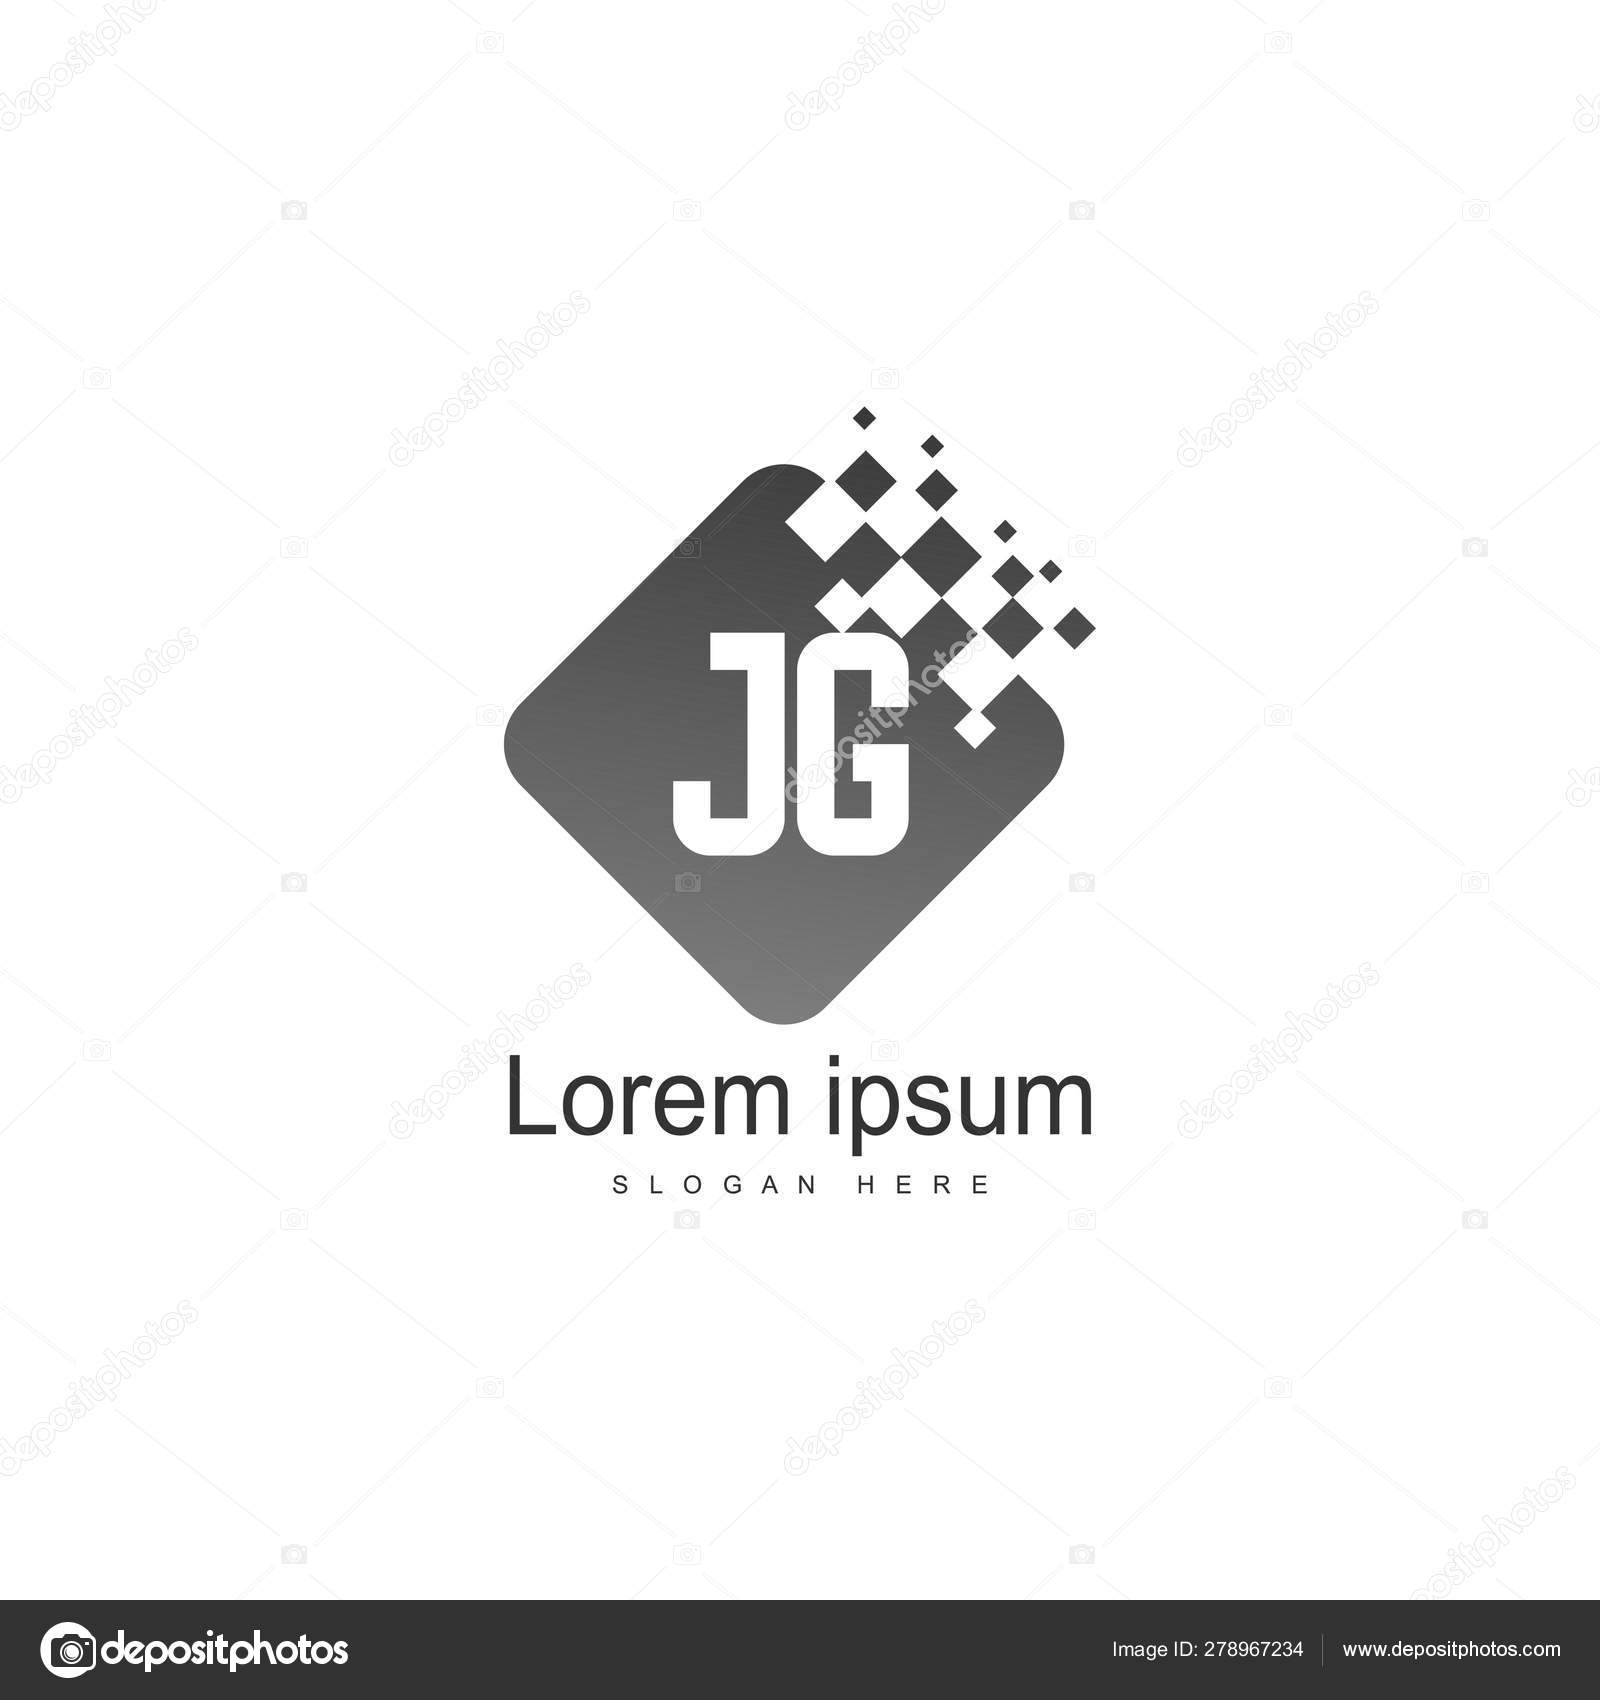 Jg Logo Images Vectorielles Jg Logo Vecteurs Libres De Droits Depositphotos